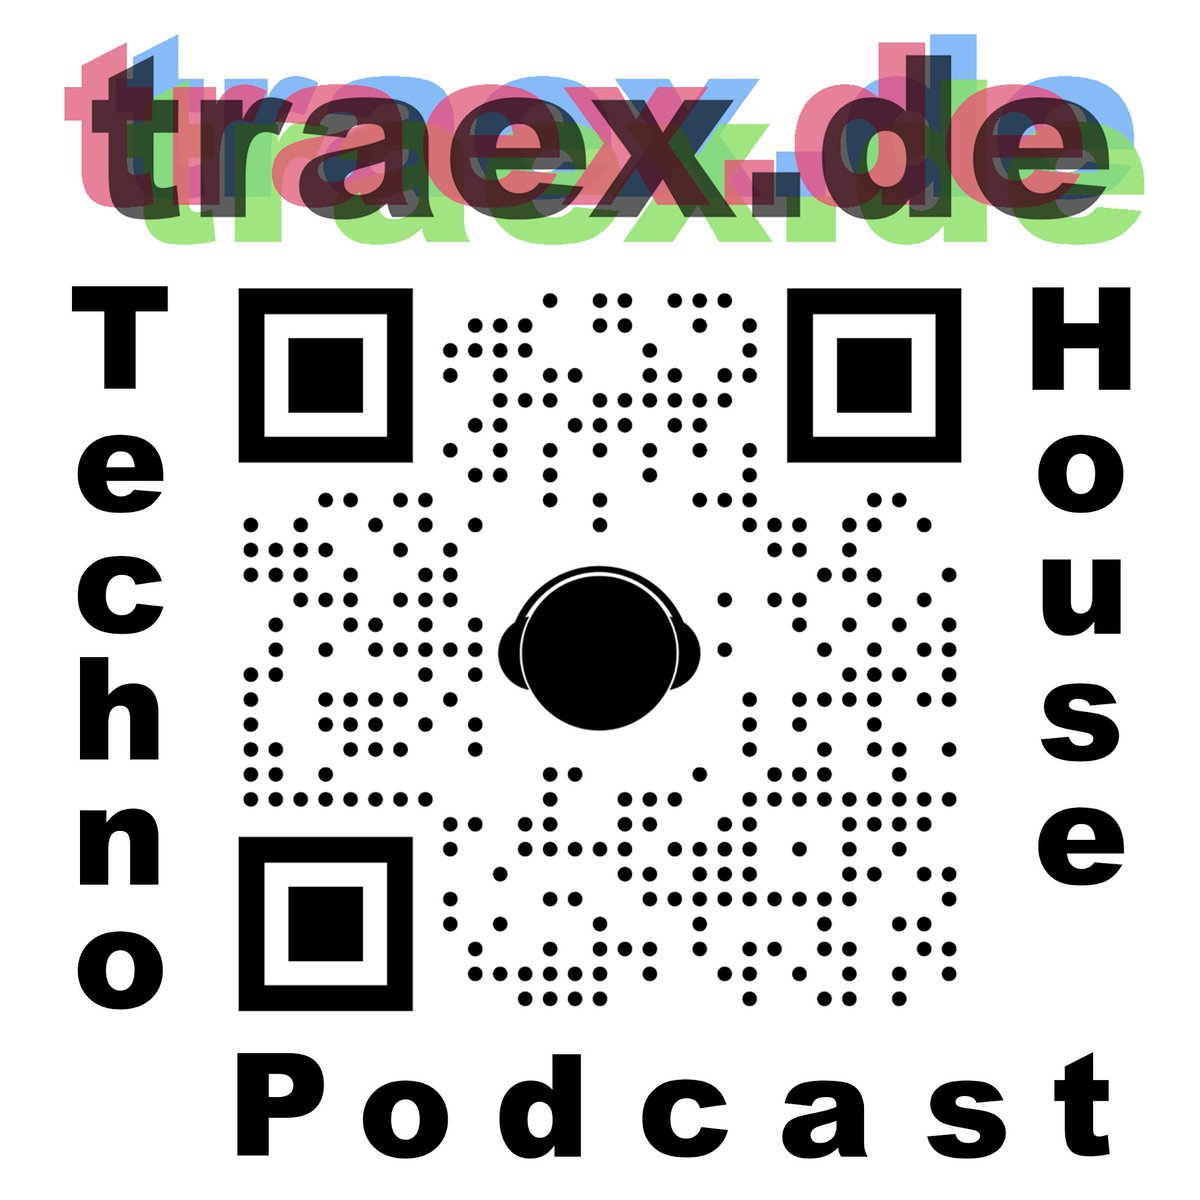 traex.de #techno #house #music #podcast no. 434 features #techhouse #deephouse #latintechno #electro #download #freedownload #musicdownload #djmix #newrelease

traex.de/techno-house-m…